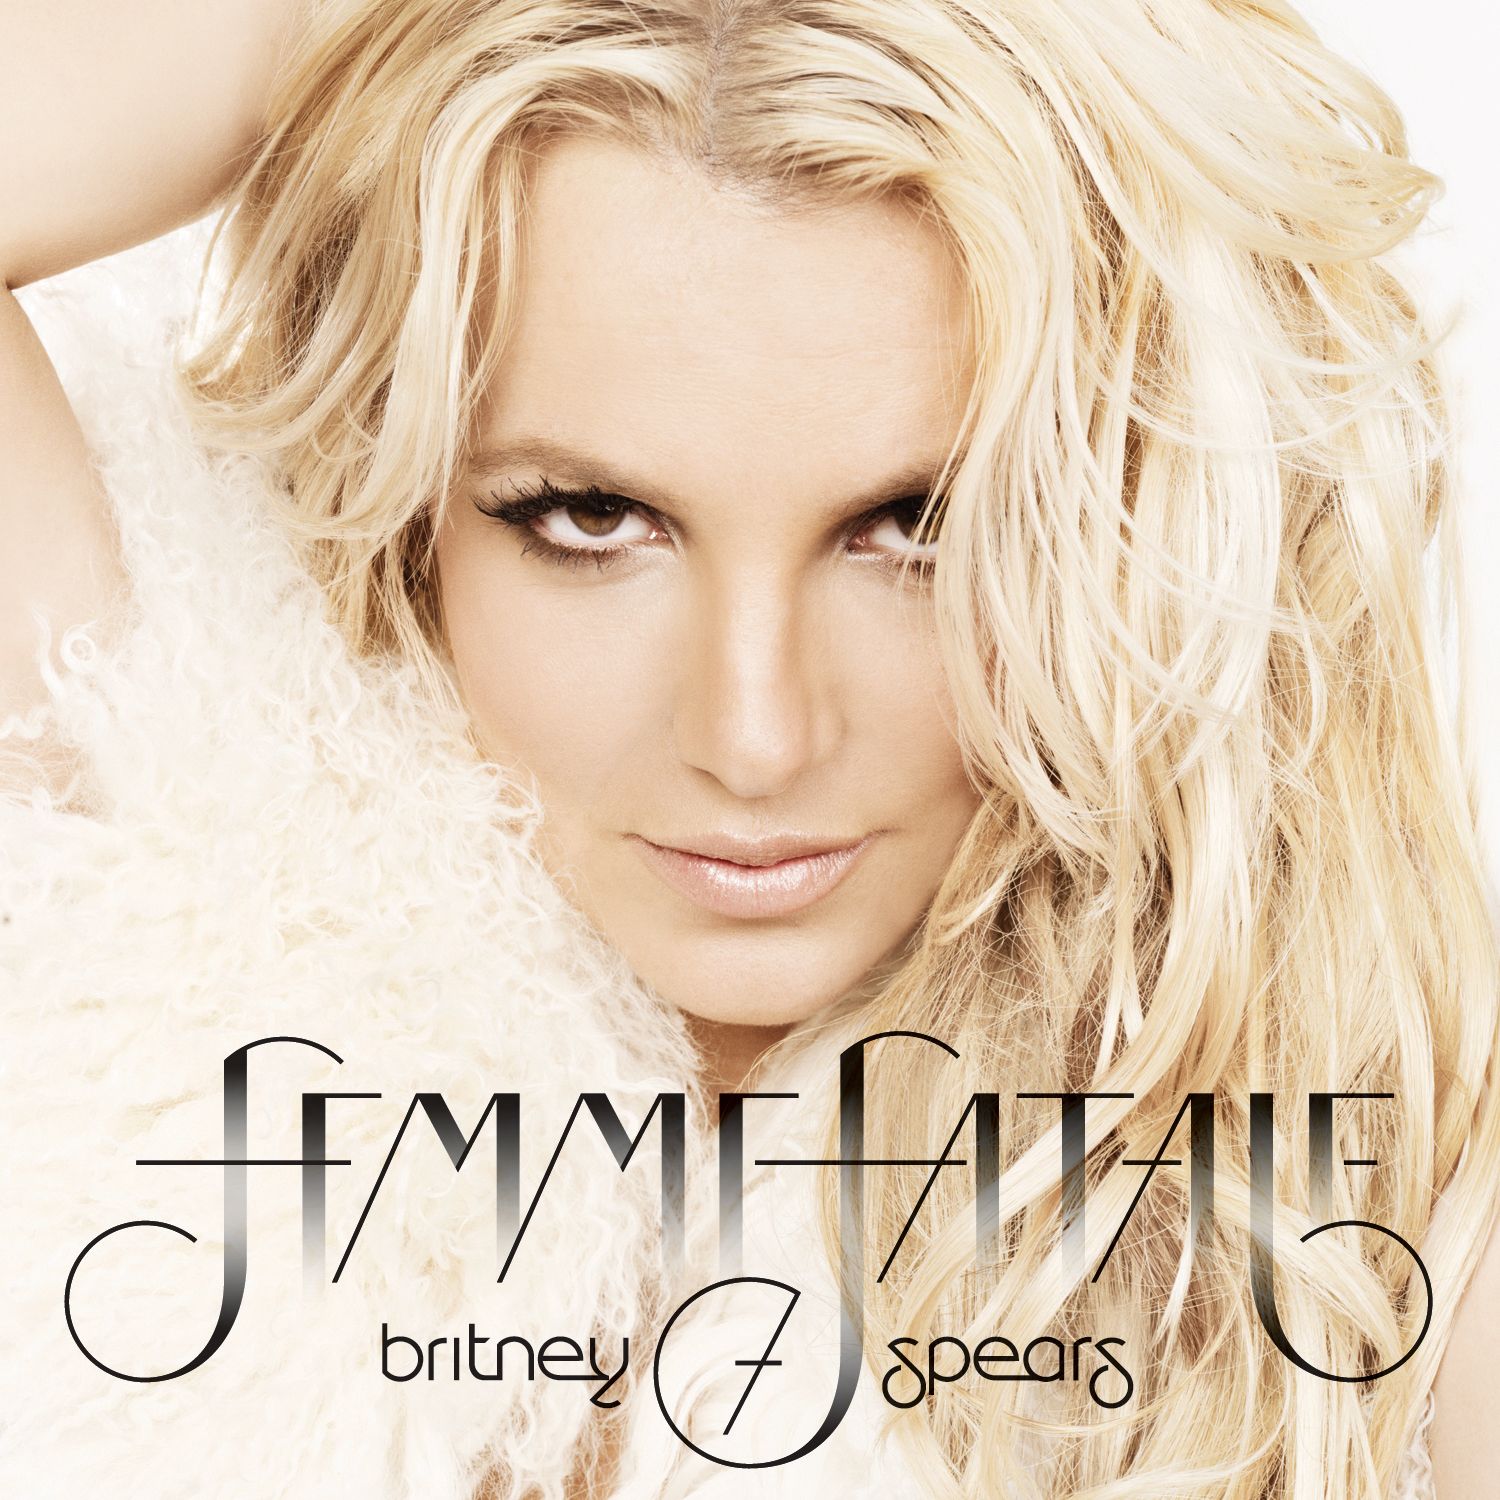 http://2.bp.blogspot.com/-DBGGKts-o7M/TZPcRzNl5cI/AAAAAAAABBc/IDjpRbne6p8/s1600/Britney-Spears-Femme-Fatale.jpg